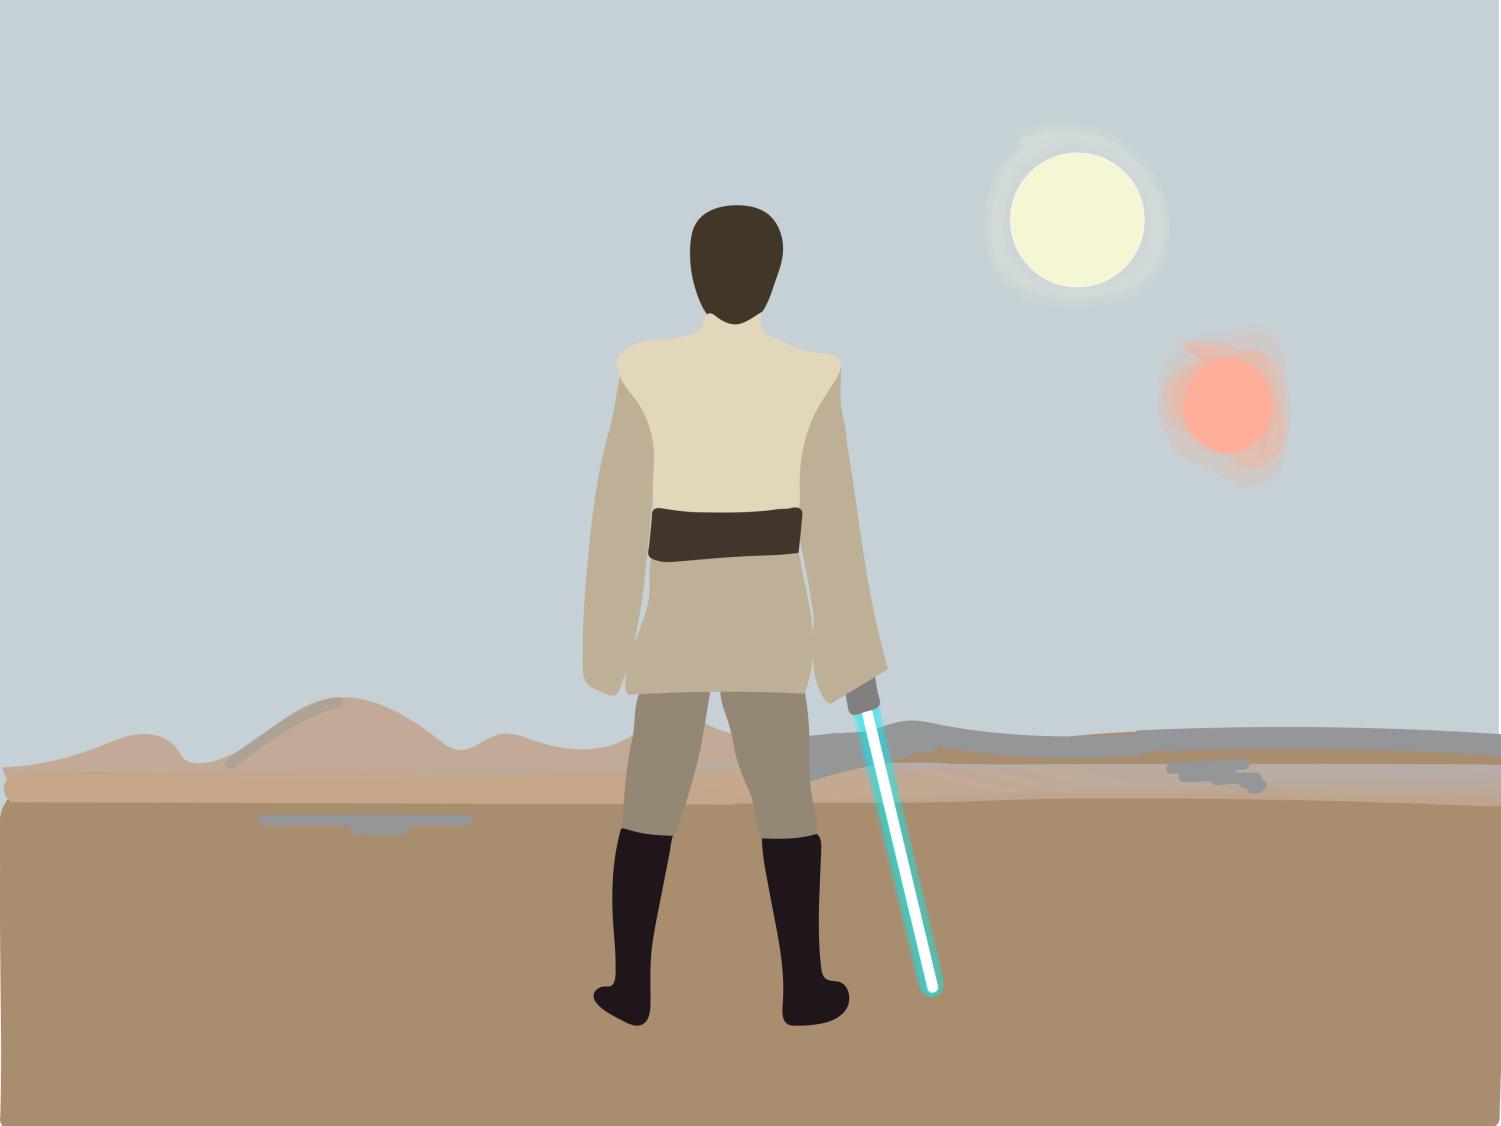 Obi-Wan Kenobi' star Moses Ingram describes what Jedi school is like